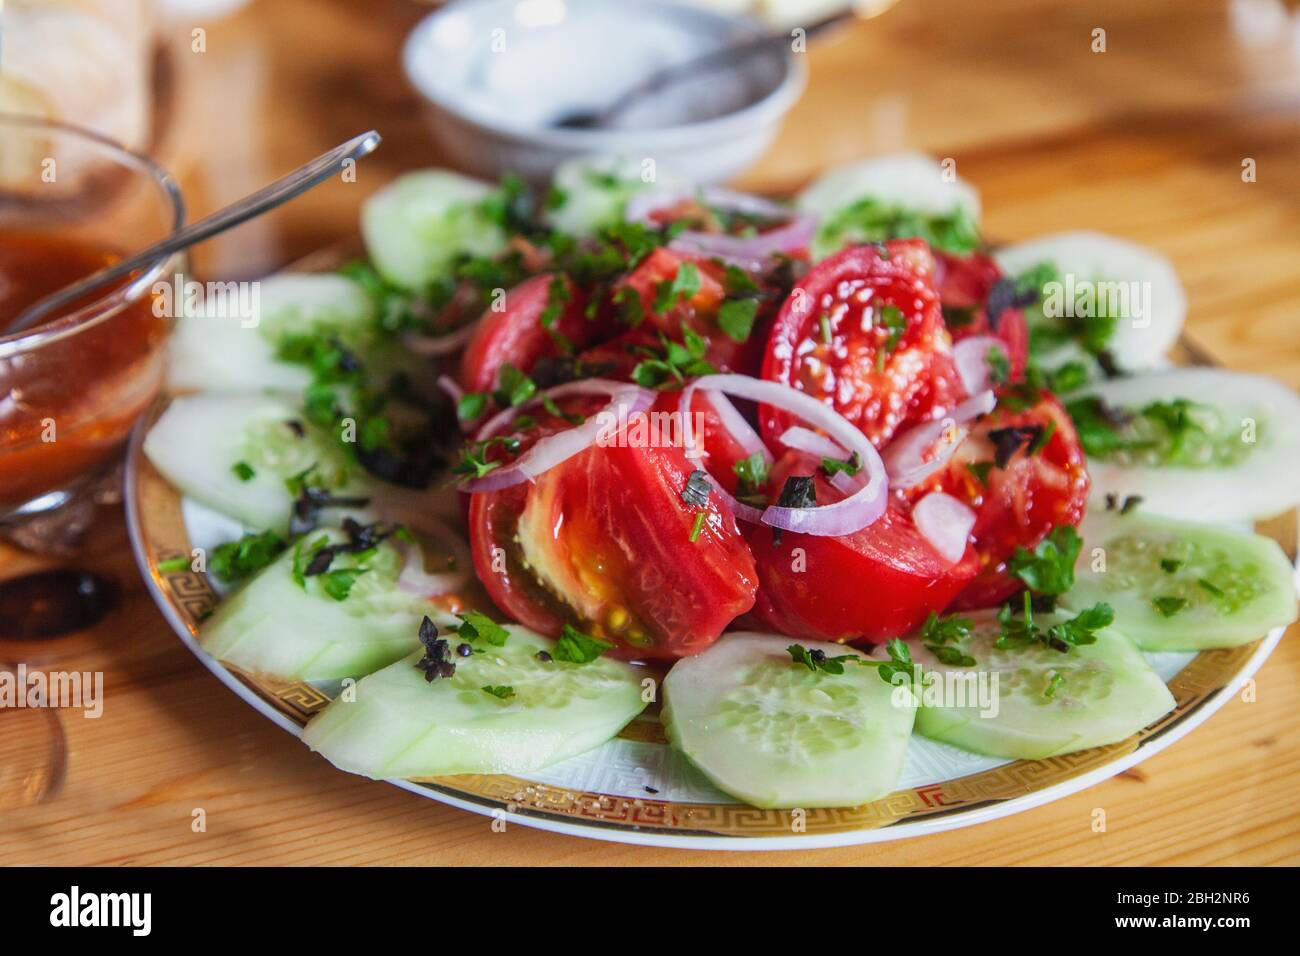 Tomato and cucumber salad Stock Photo